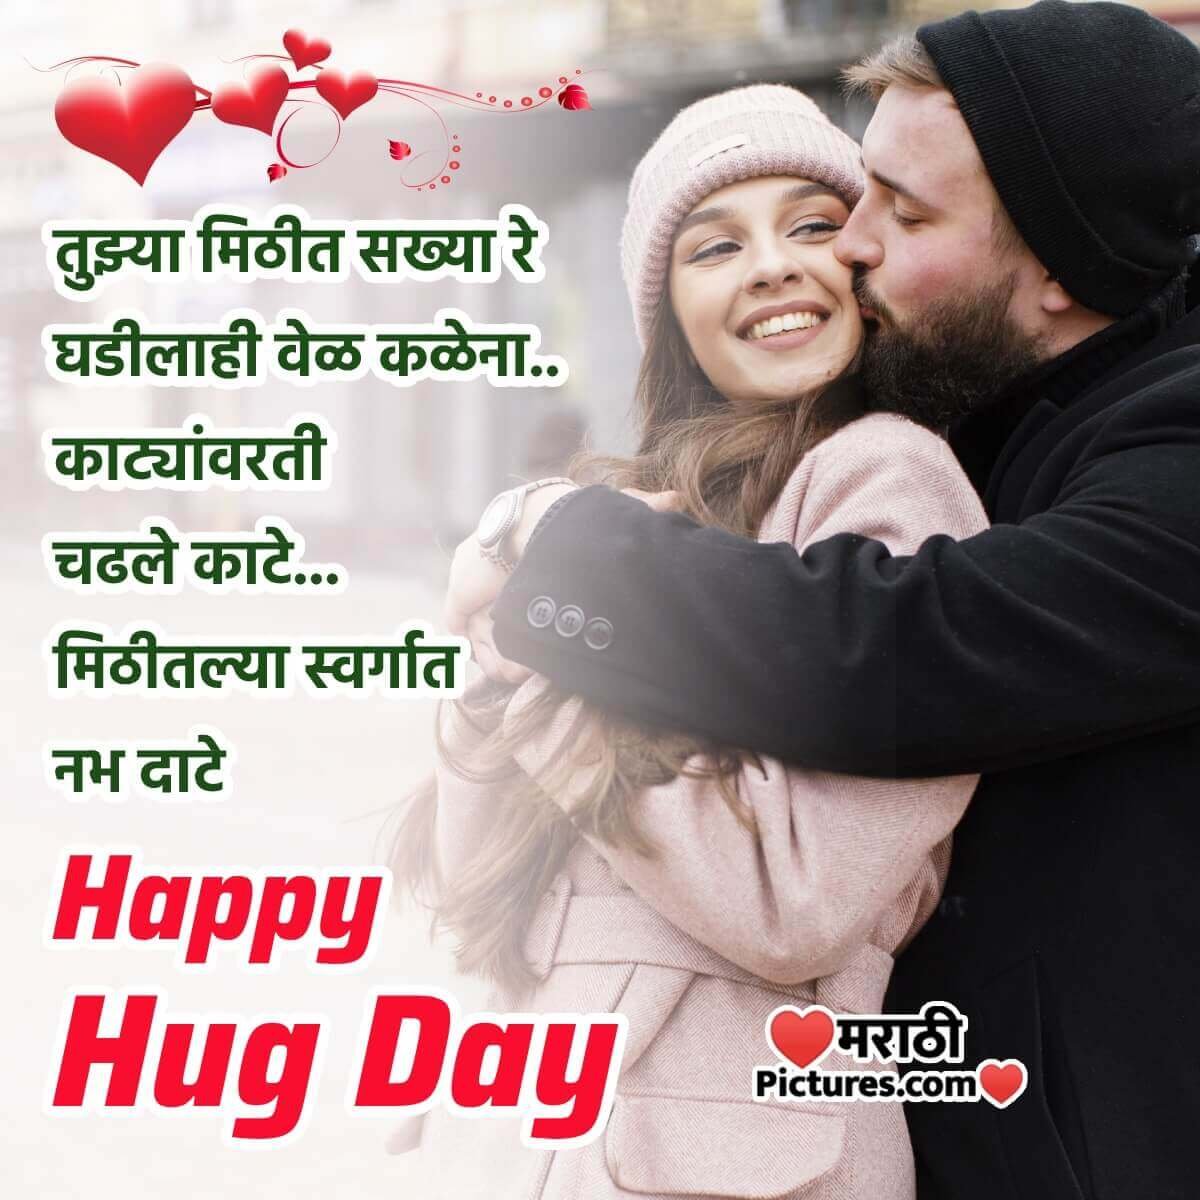 Wonderful Hug Day Message Photo